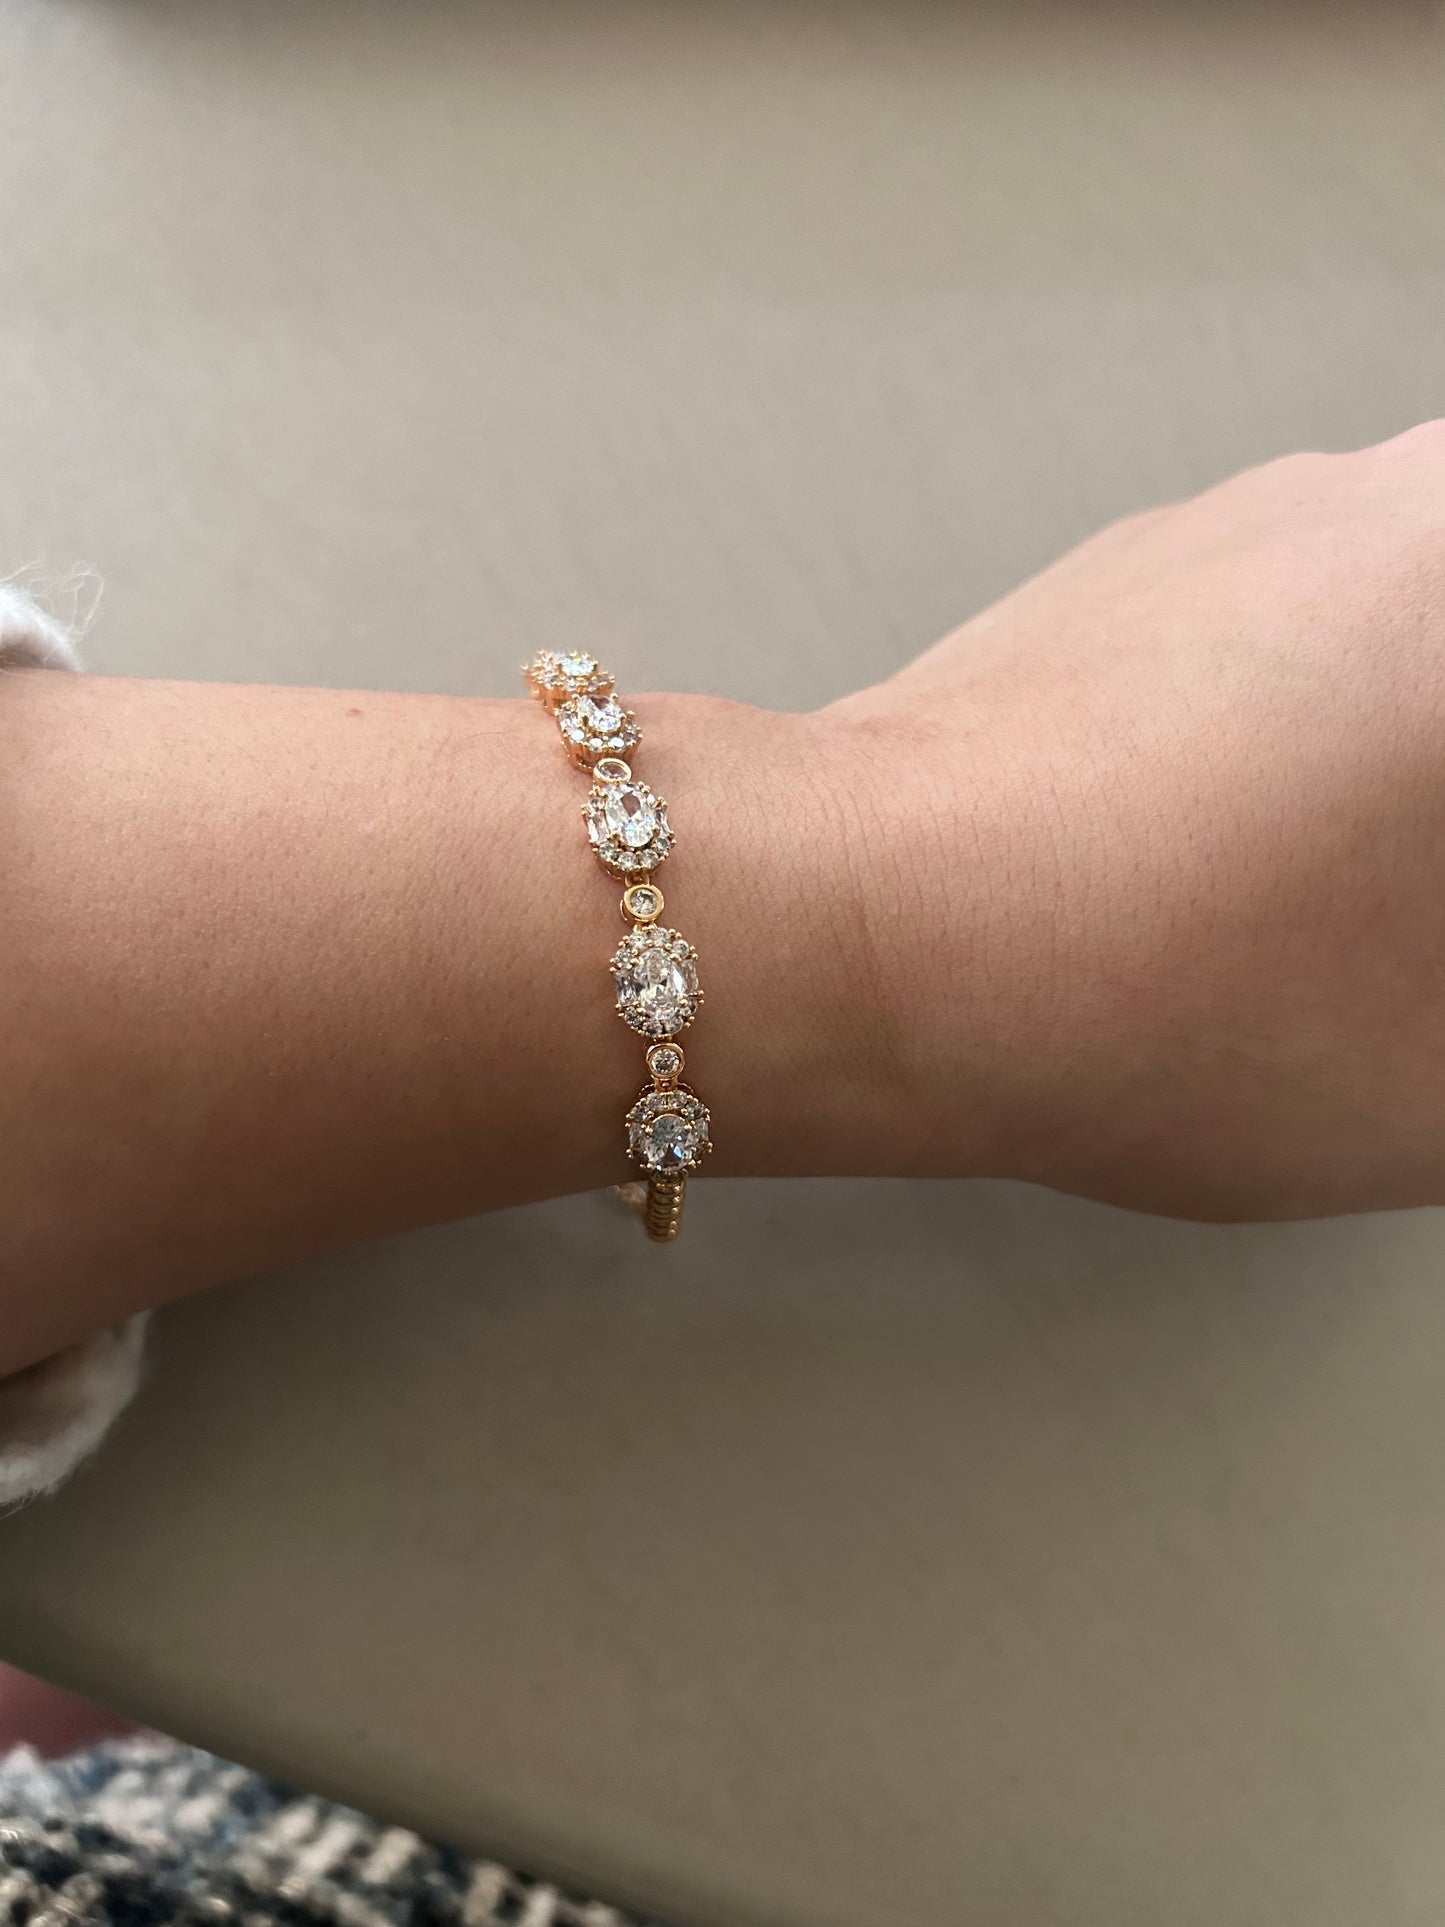 Ermin white bracelet